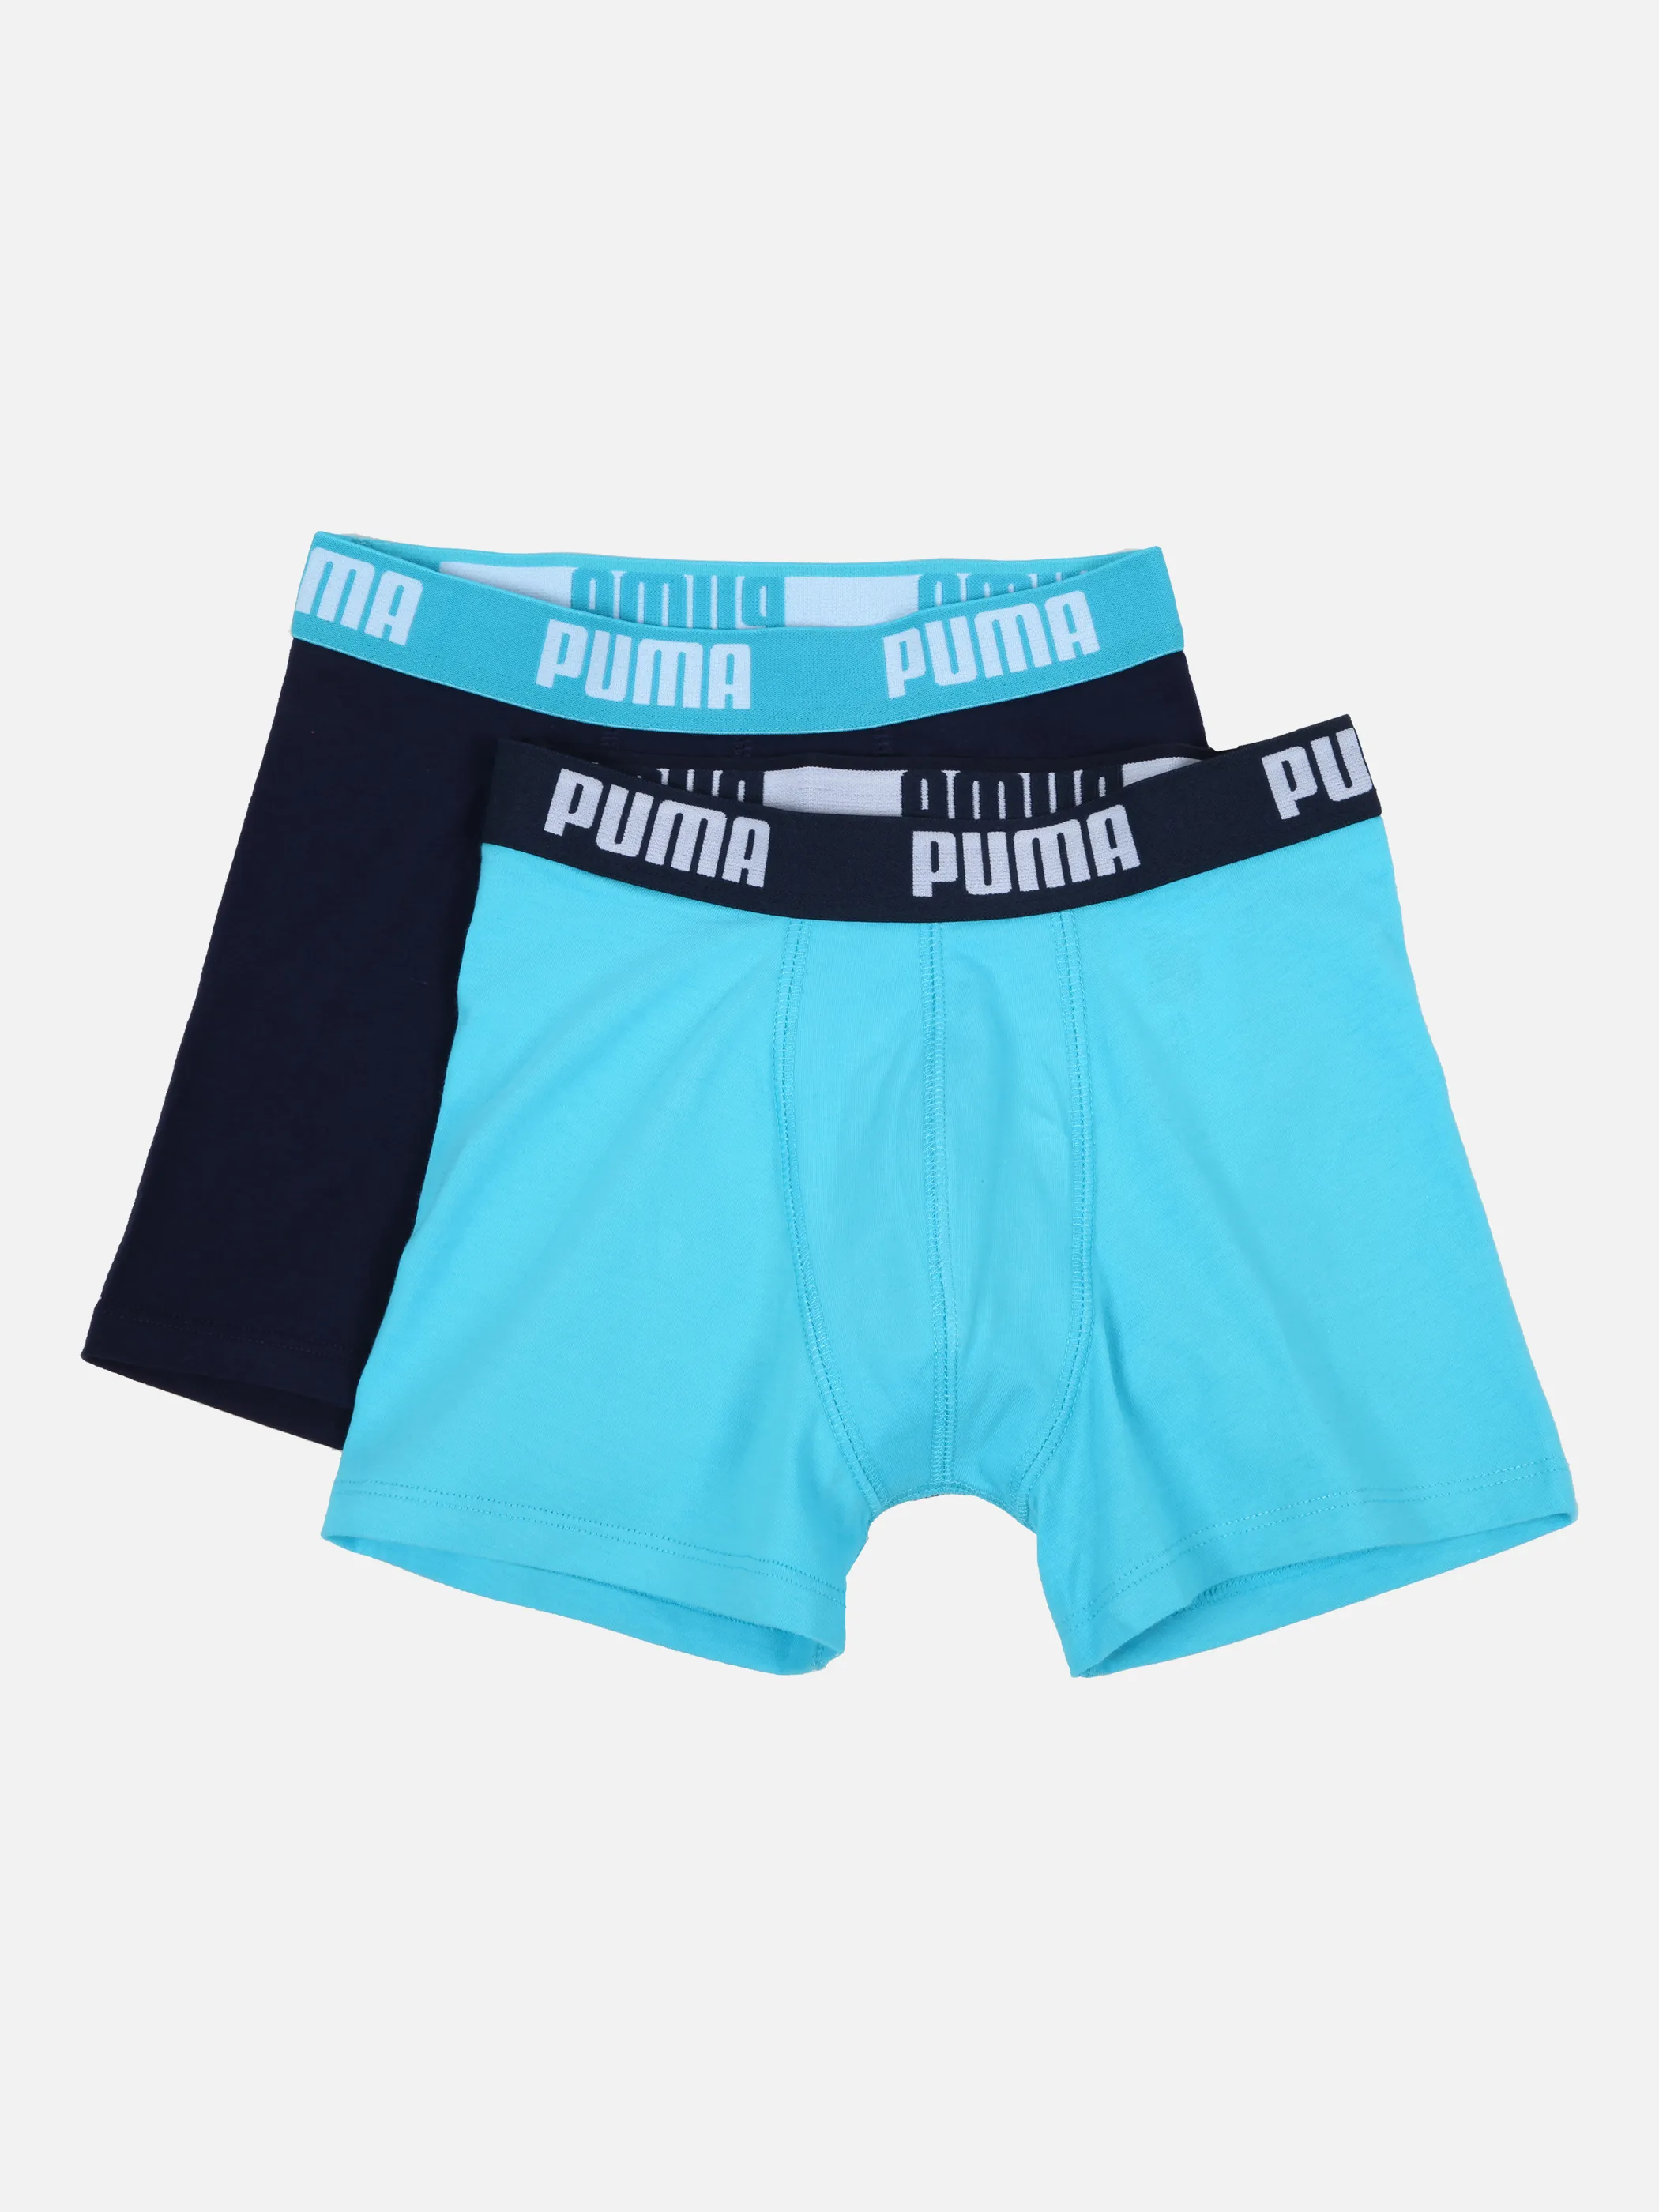 Puma Kn-PUMA BASIC BOXER 2er Pack Blau 834192 789 1